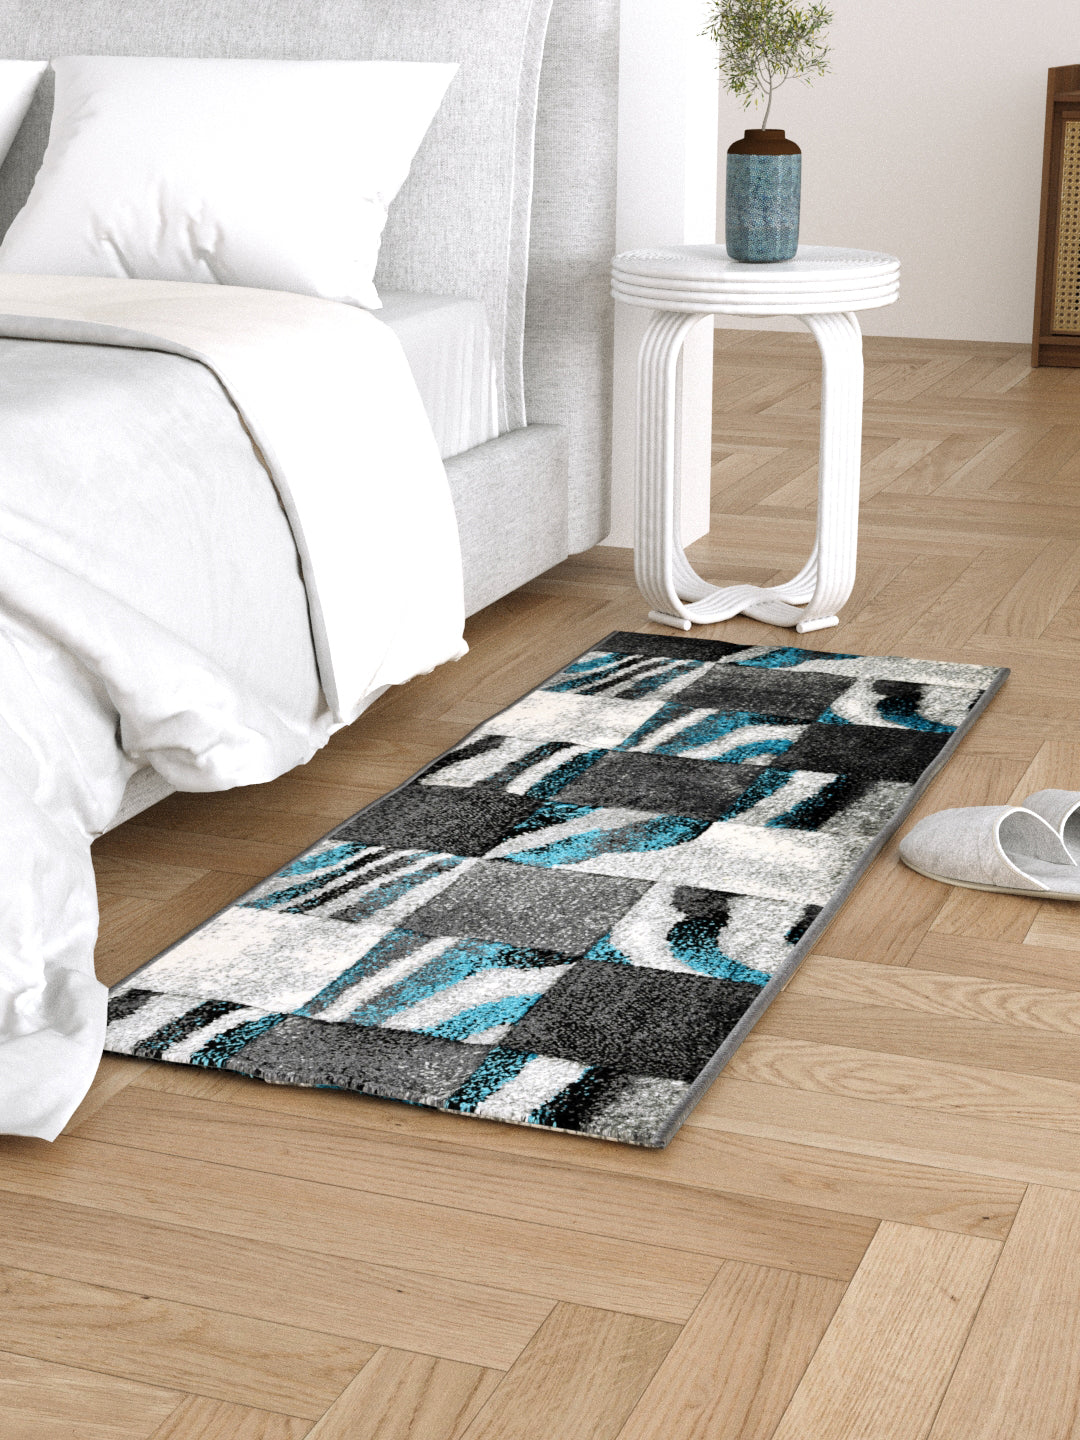 Bedside Runner Carpet Rug With Anti Skid Backing; 57x140 cms; Grey Blue Checks